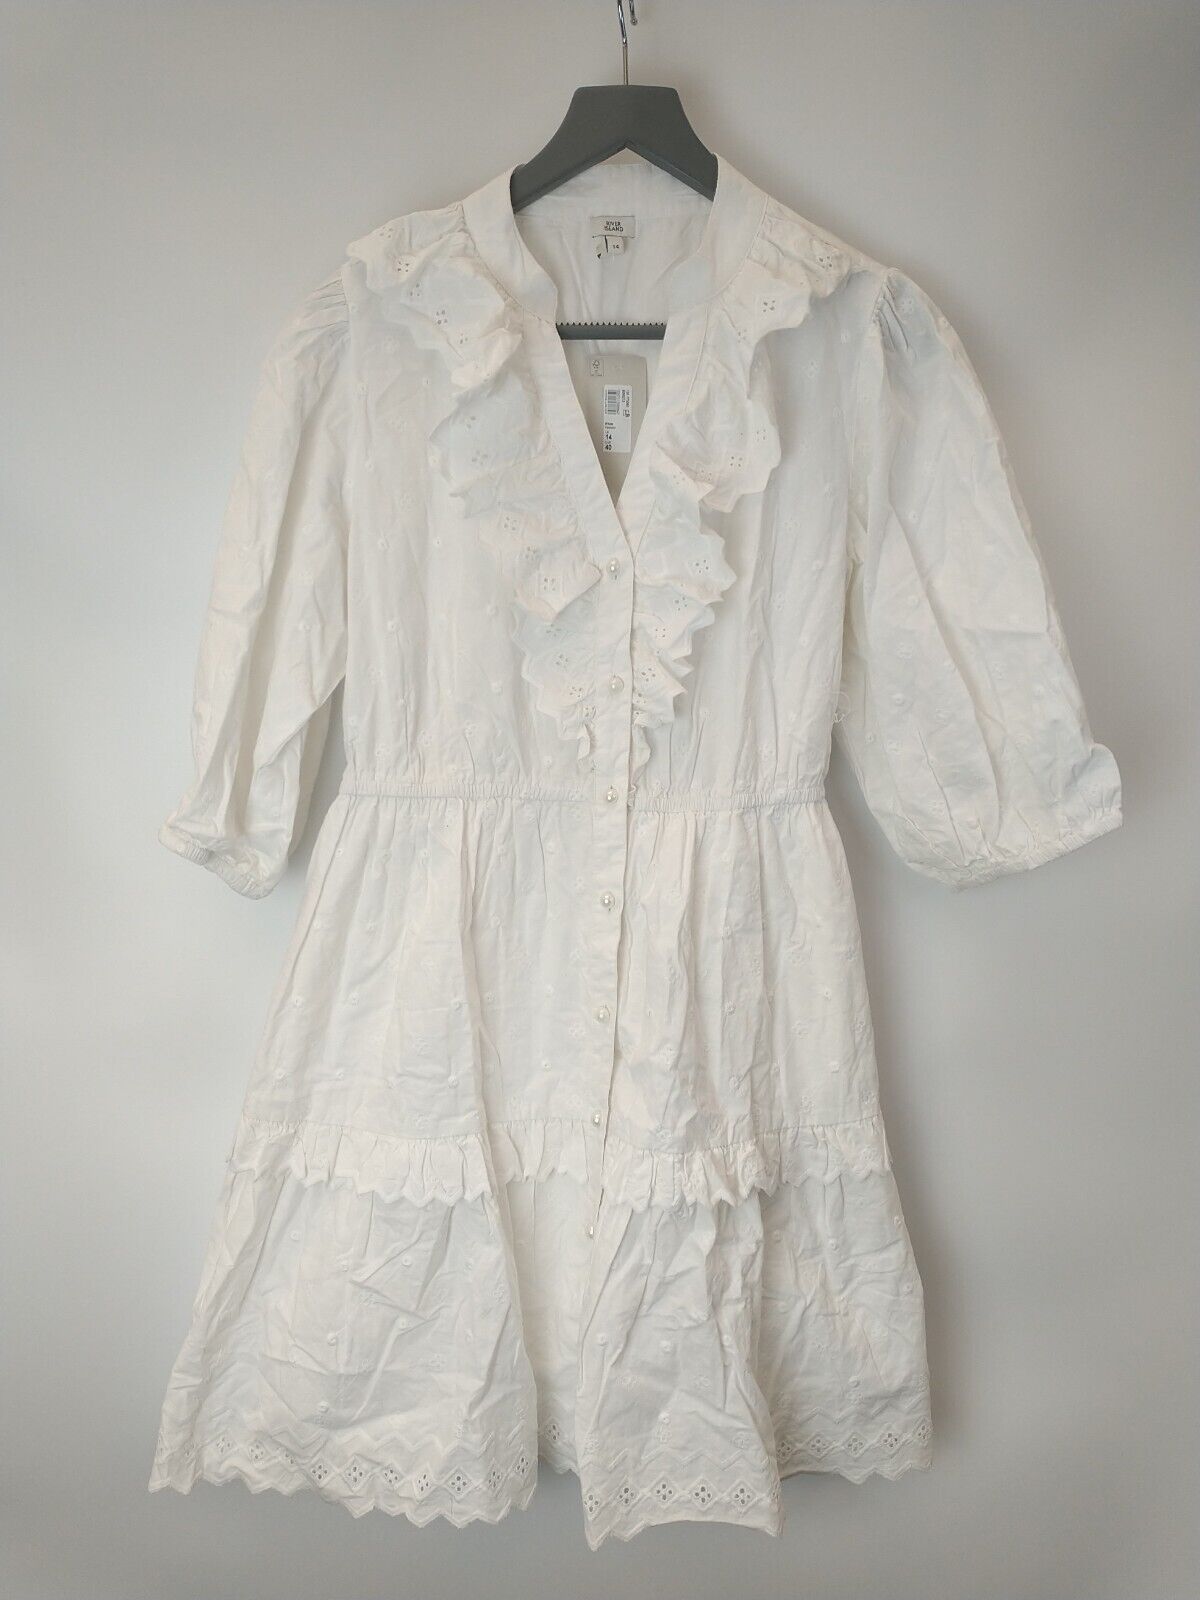 River Island White Fashion Button Up Dress. UK 6